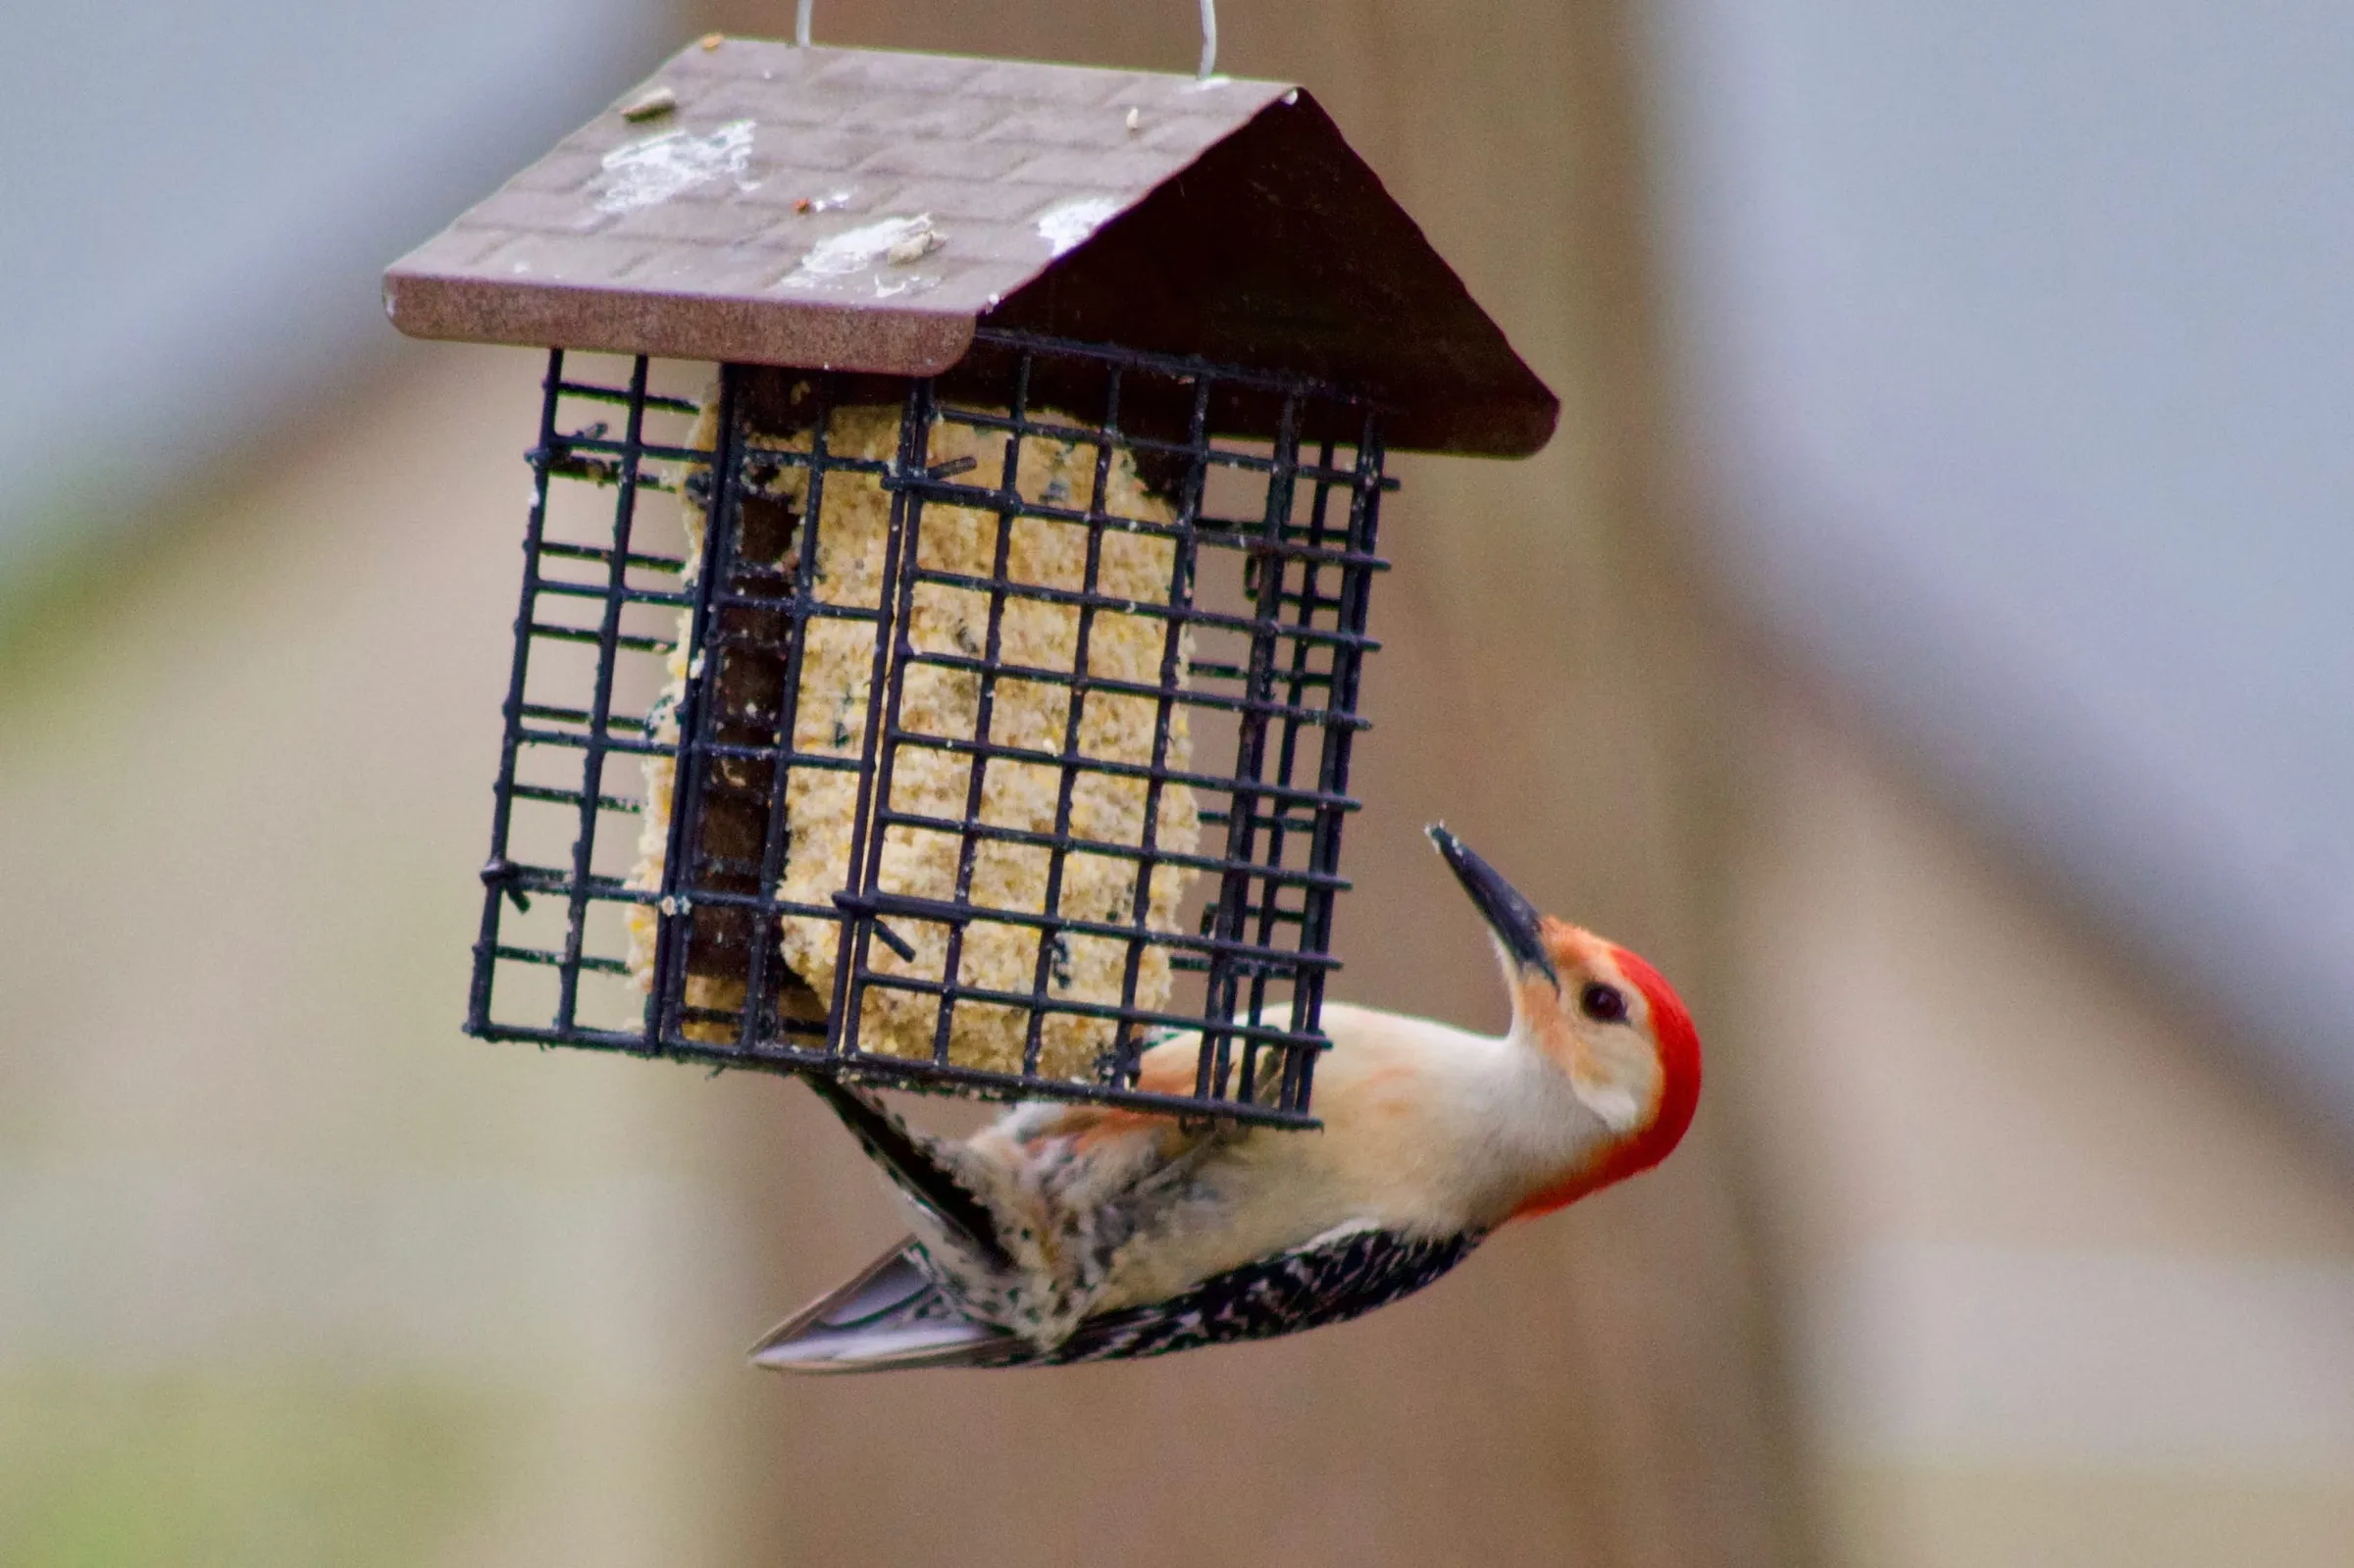 A red-bellied woodpecker eats from a bird feeder